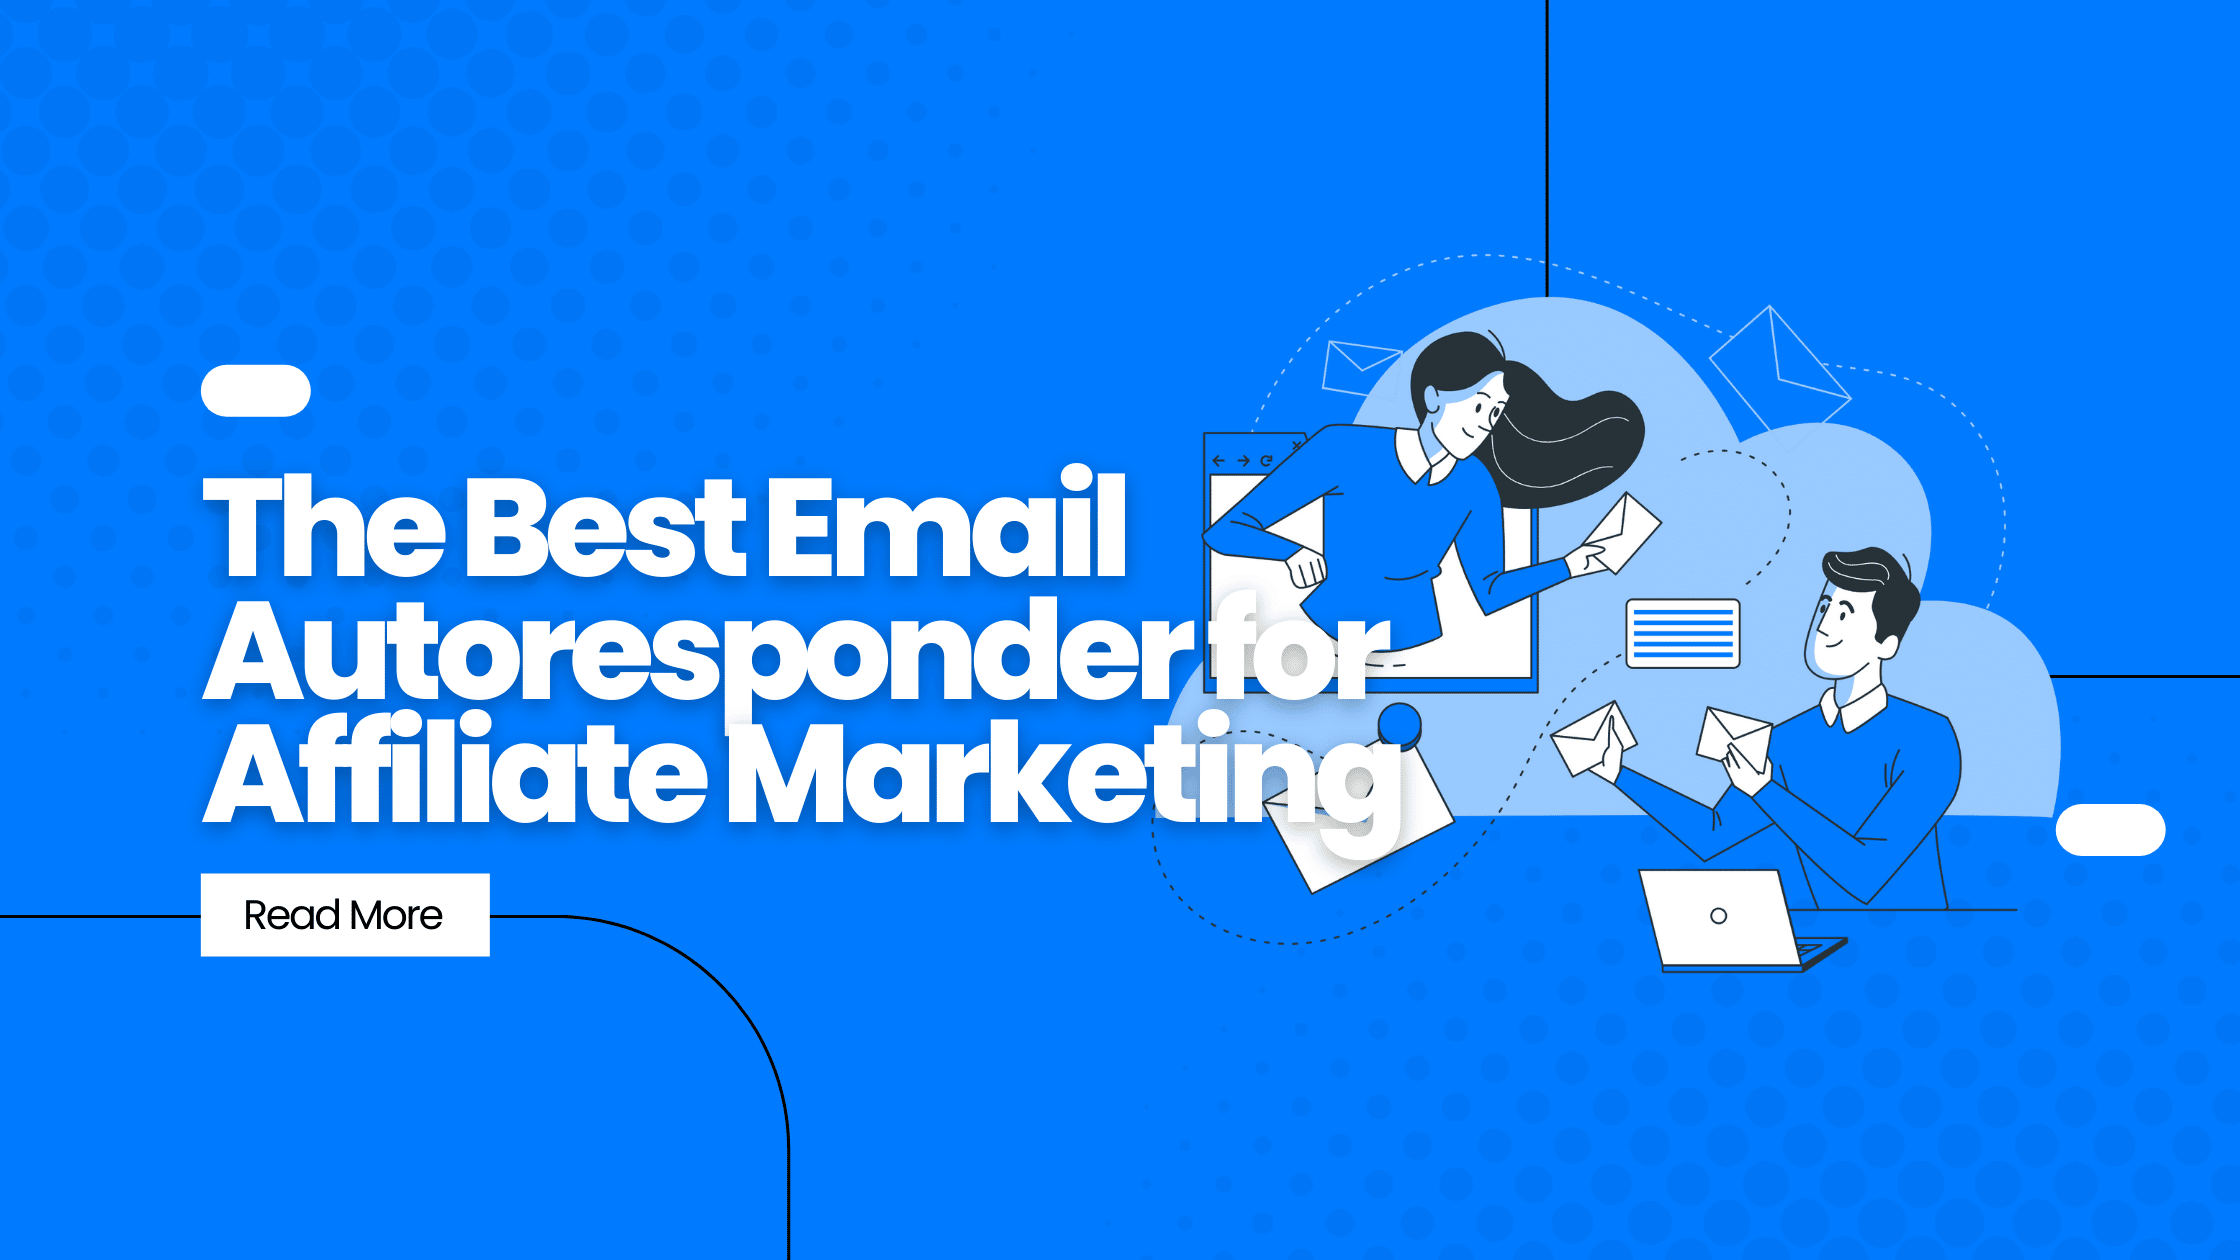 Best Email Autoresponder for Affiliate Marketing